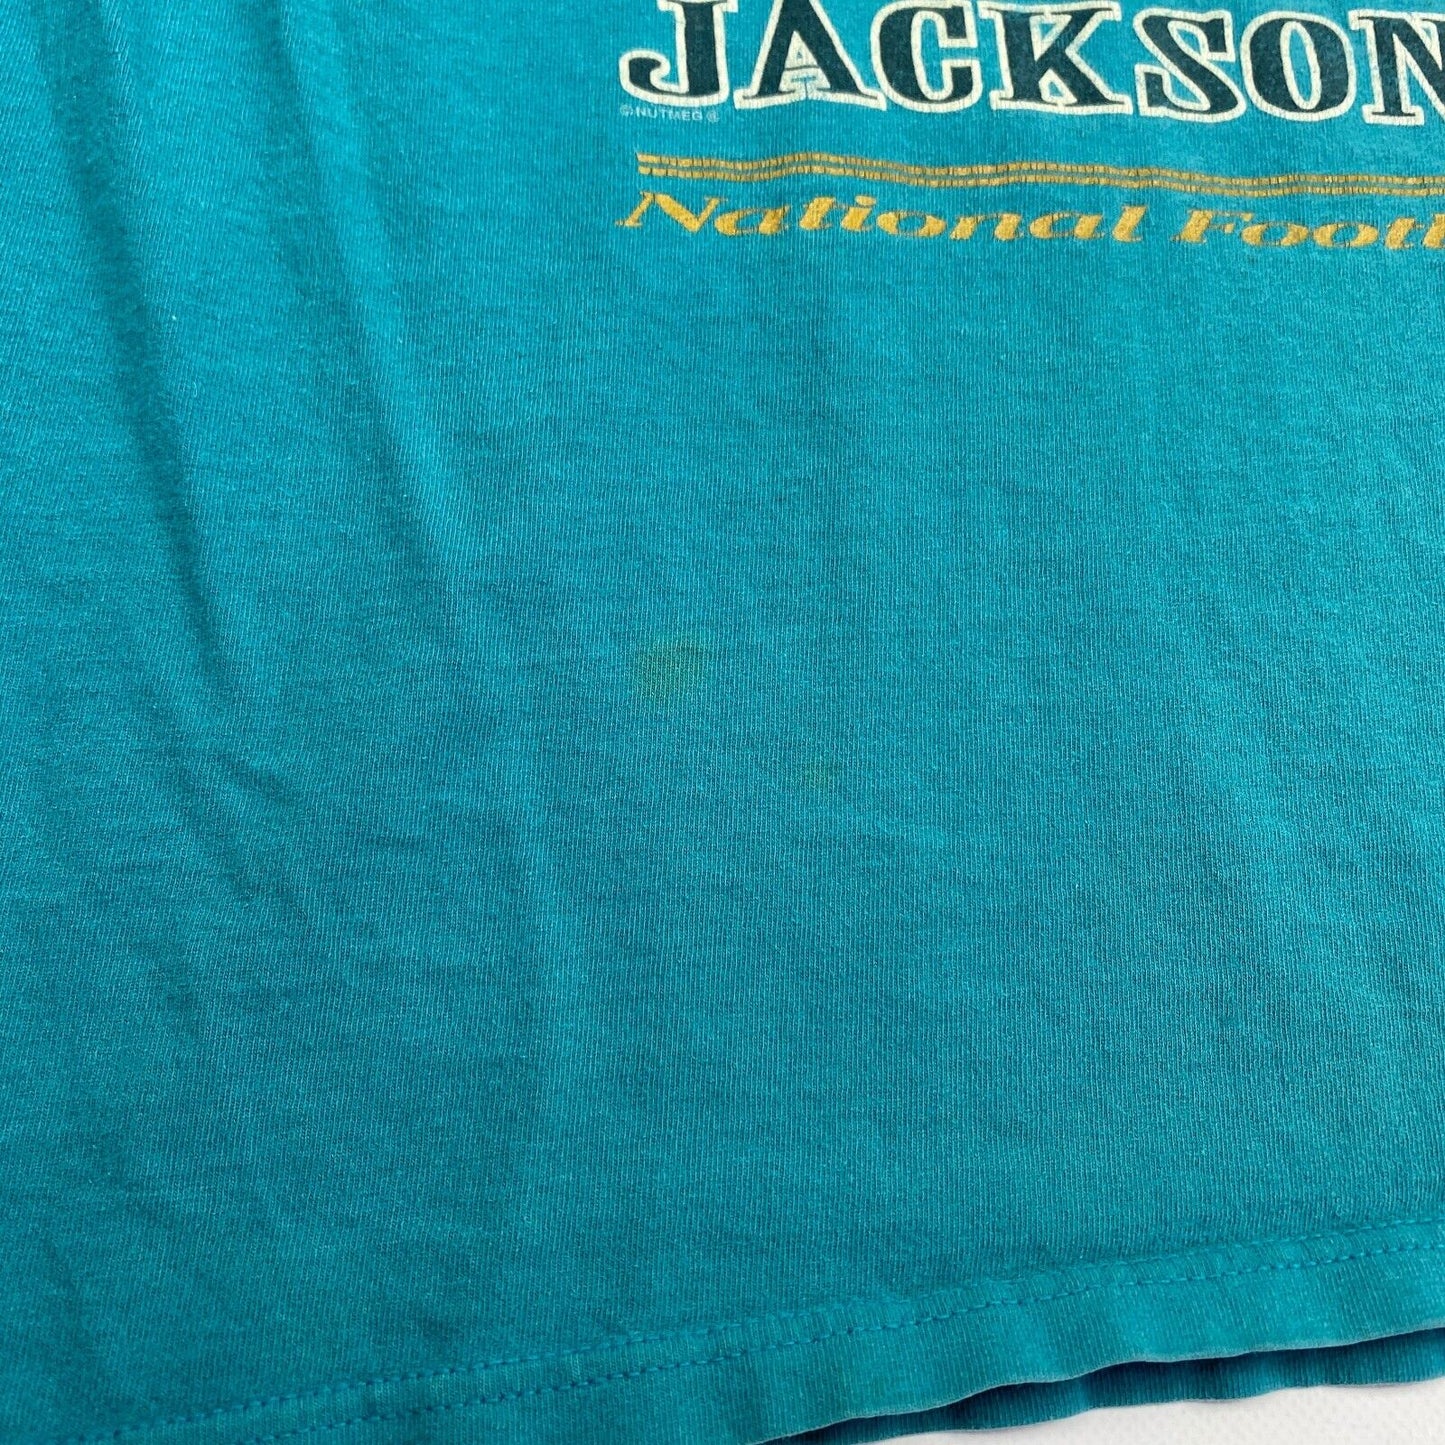 VINTAGE 1997 Jacksonville Jaguars NFL Logo Teal T-Shirt sz XXL Men